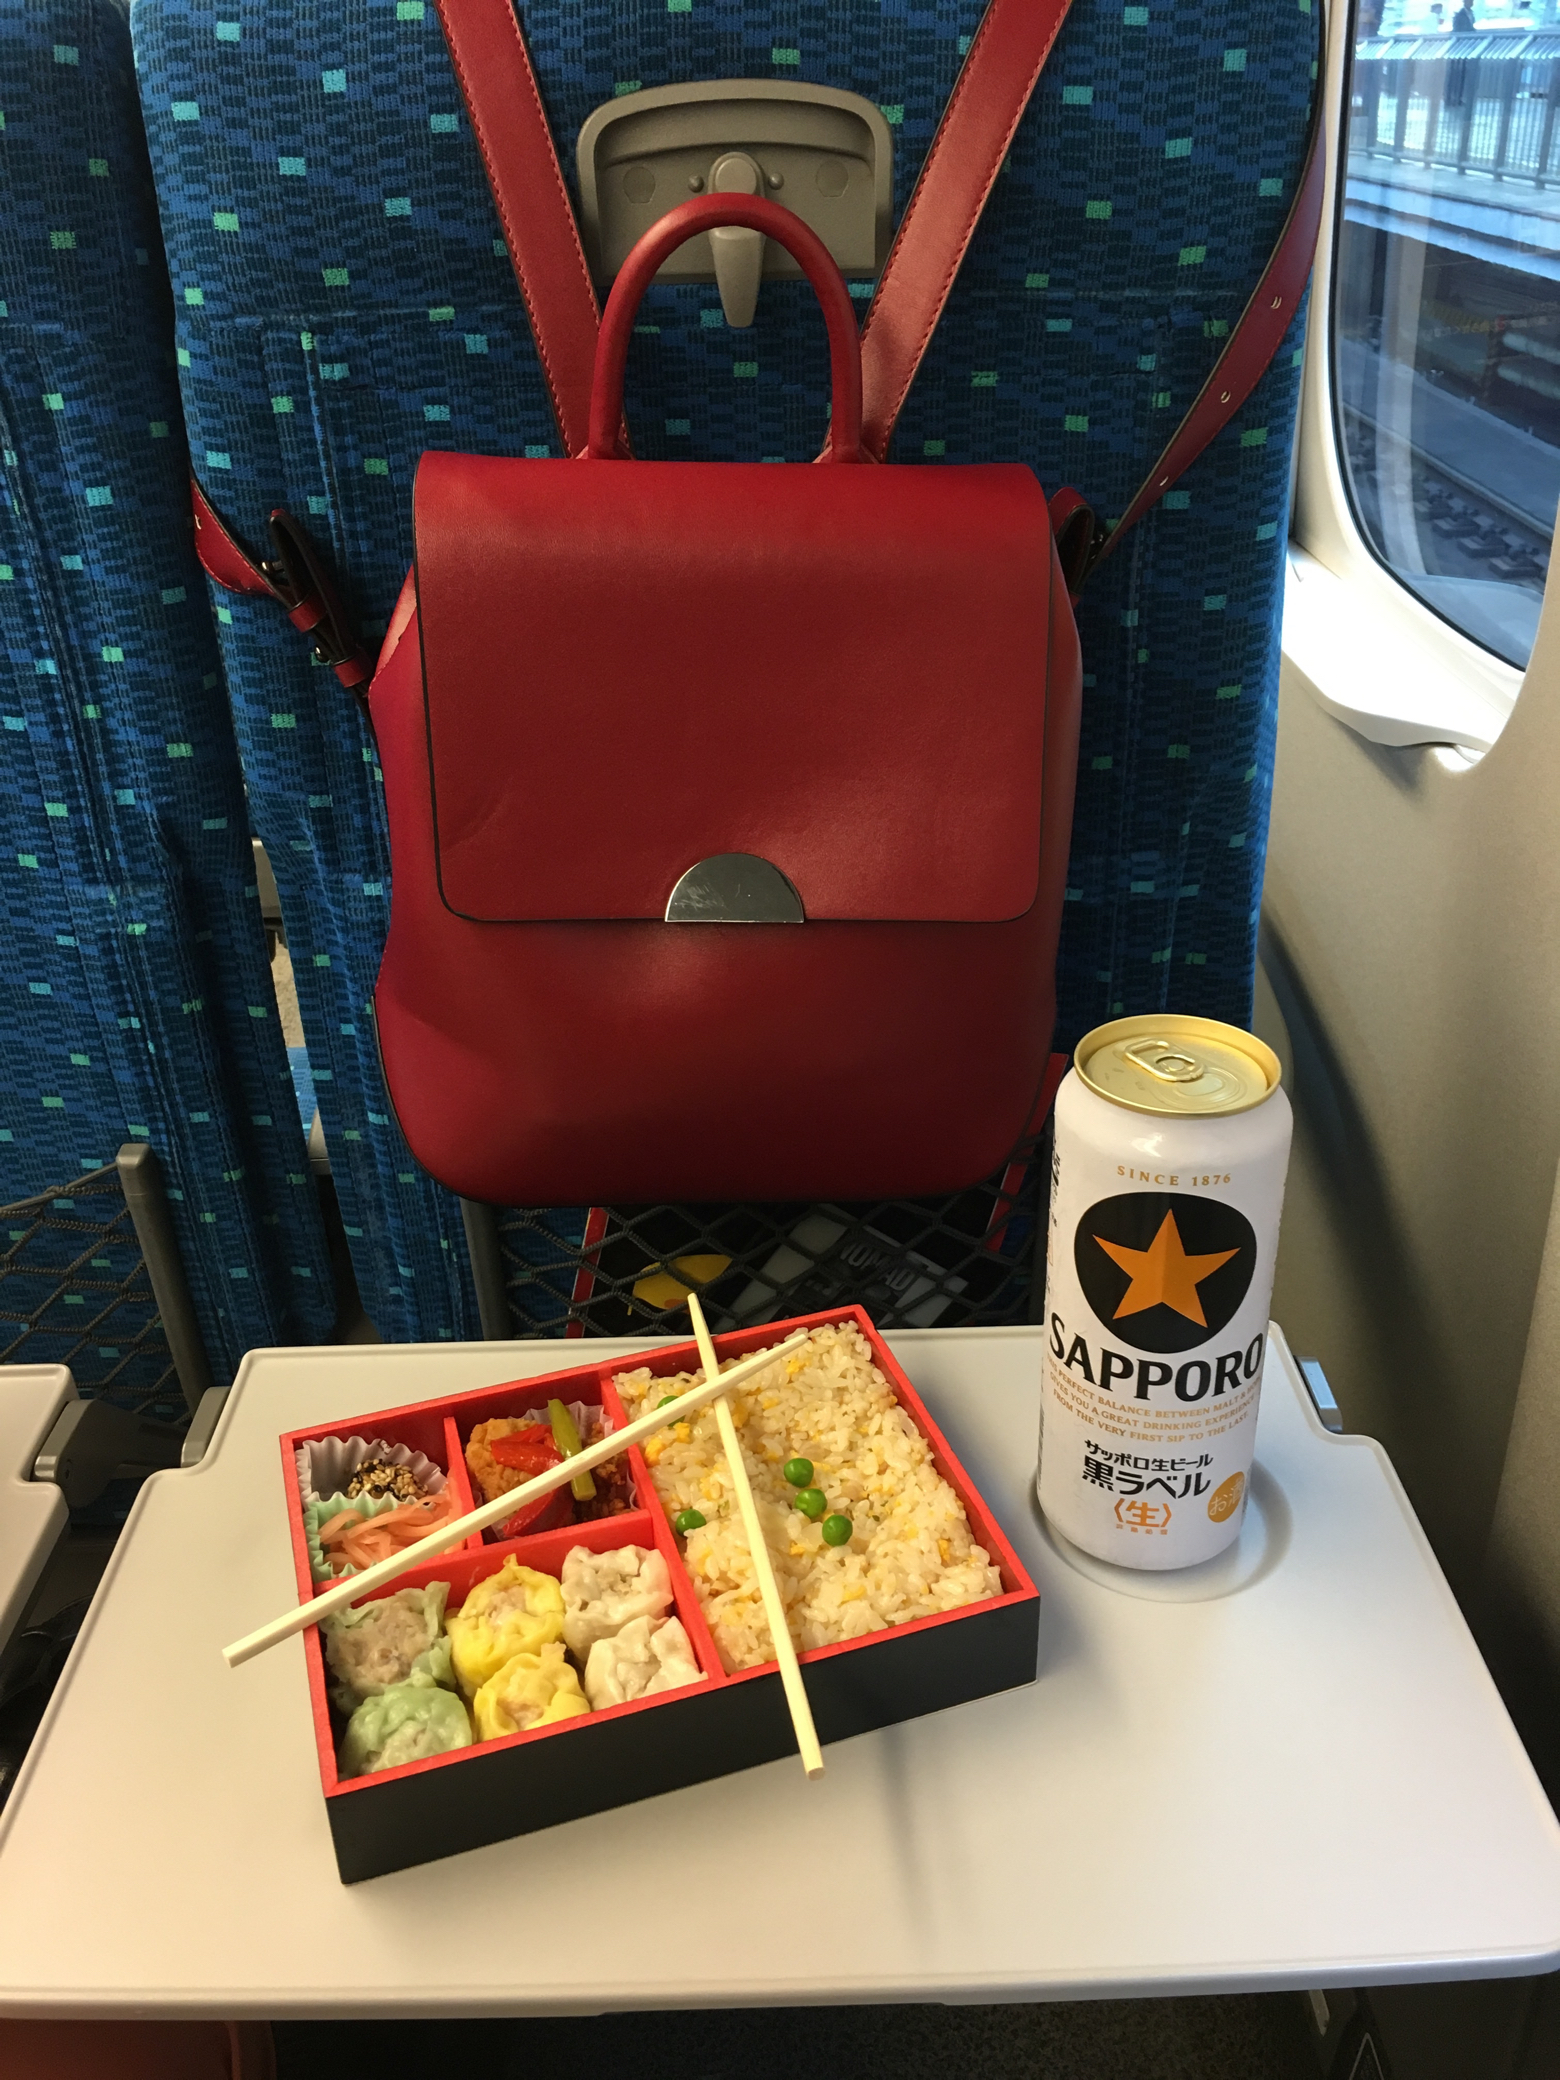 Traveling Tokyo and Kyoto, traveling on the Shinkansen train